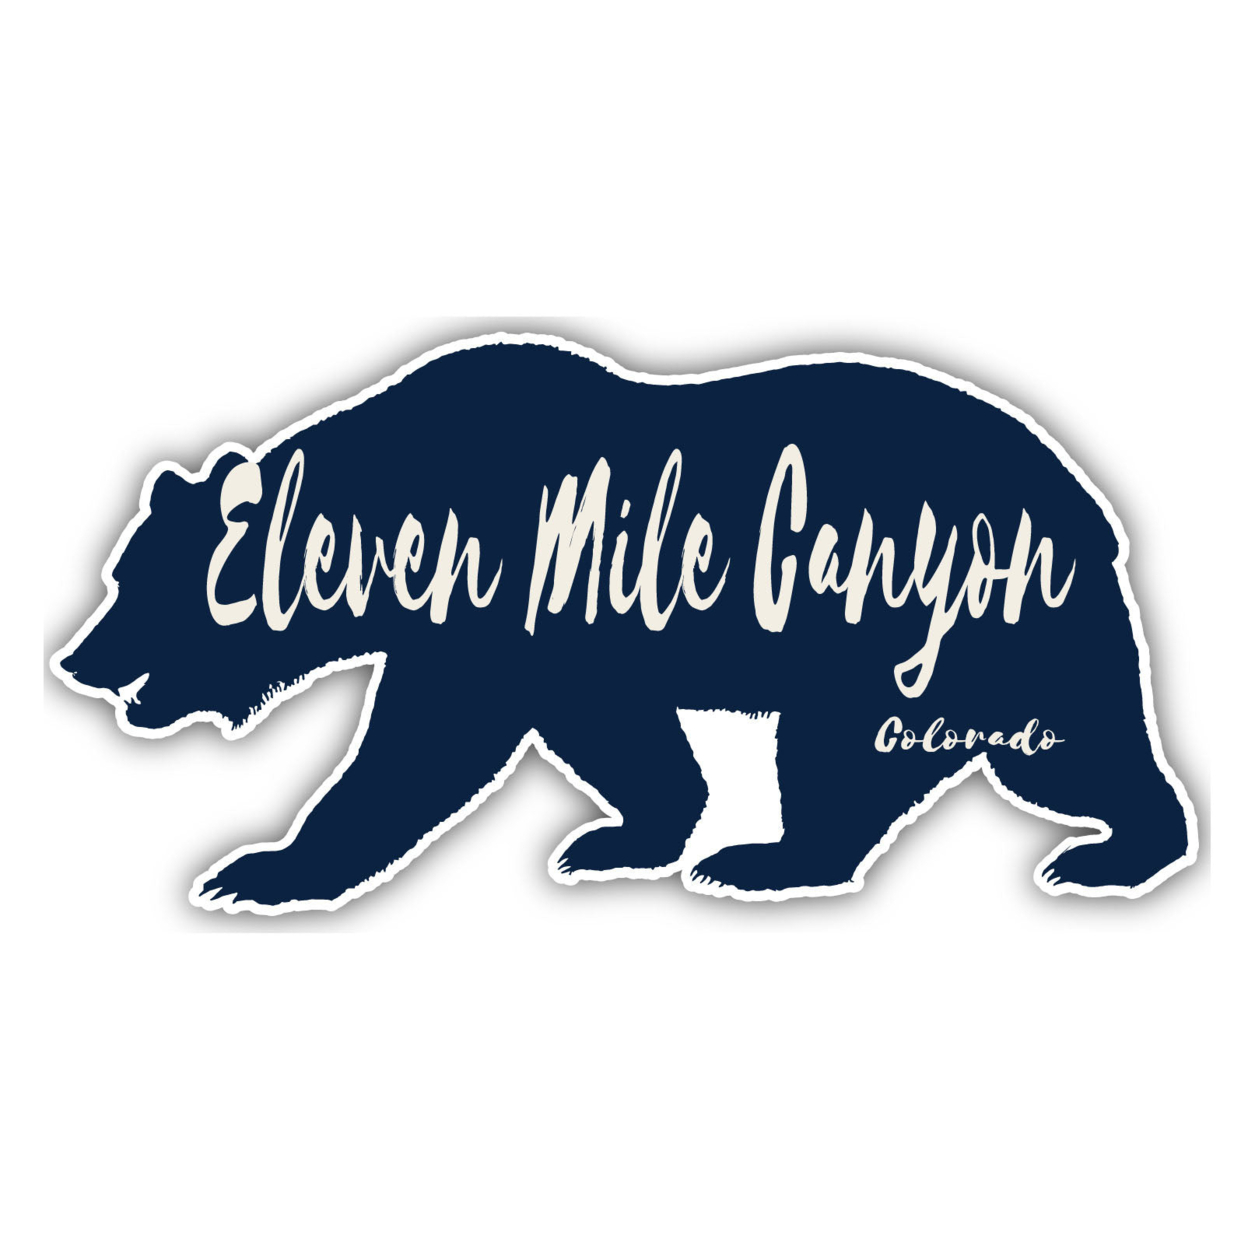 Eleven Mile Canyon Colorado Souvenir Decorative Stickers (Choose Theme And Size) - Single Unit, 8-Inch, Bear